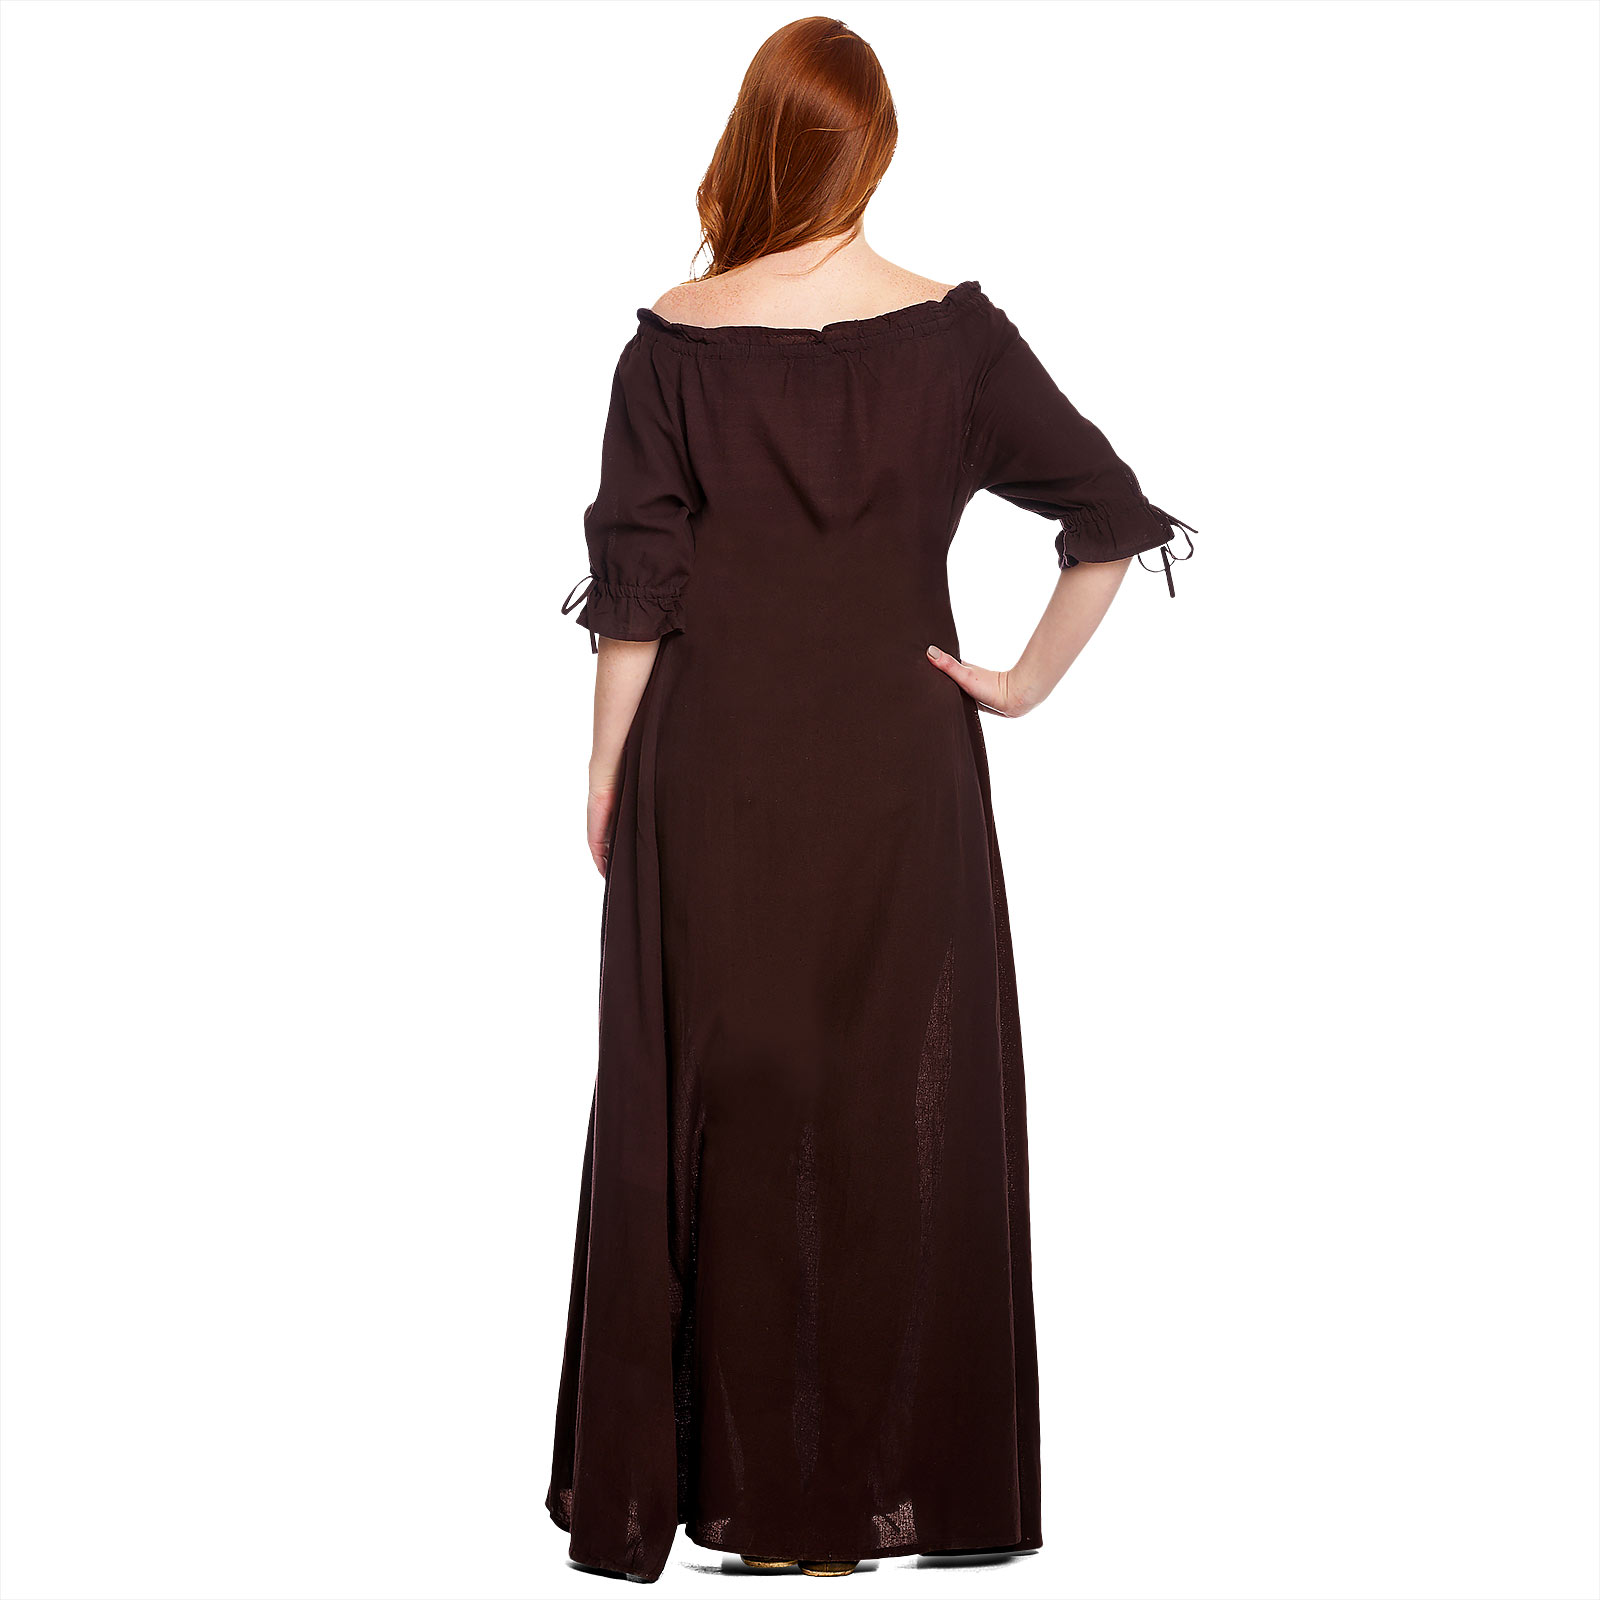 Medieval Short Sleeve Dress Brown